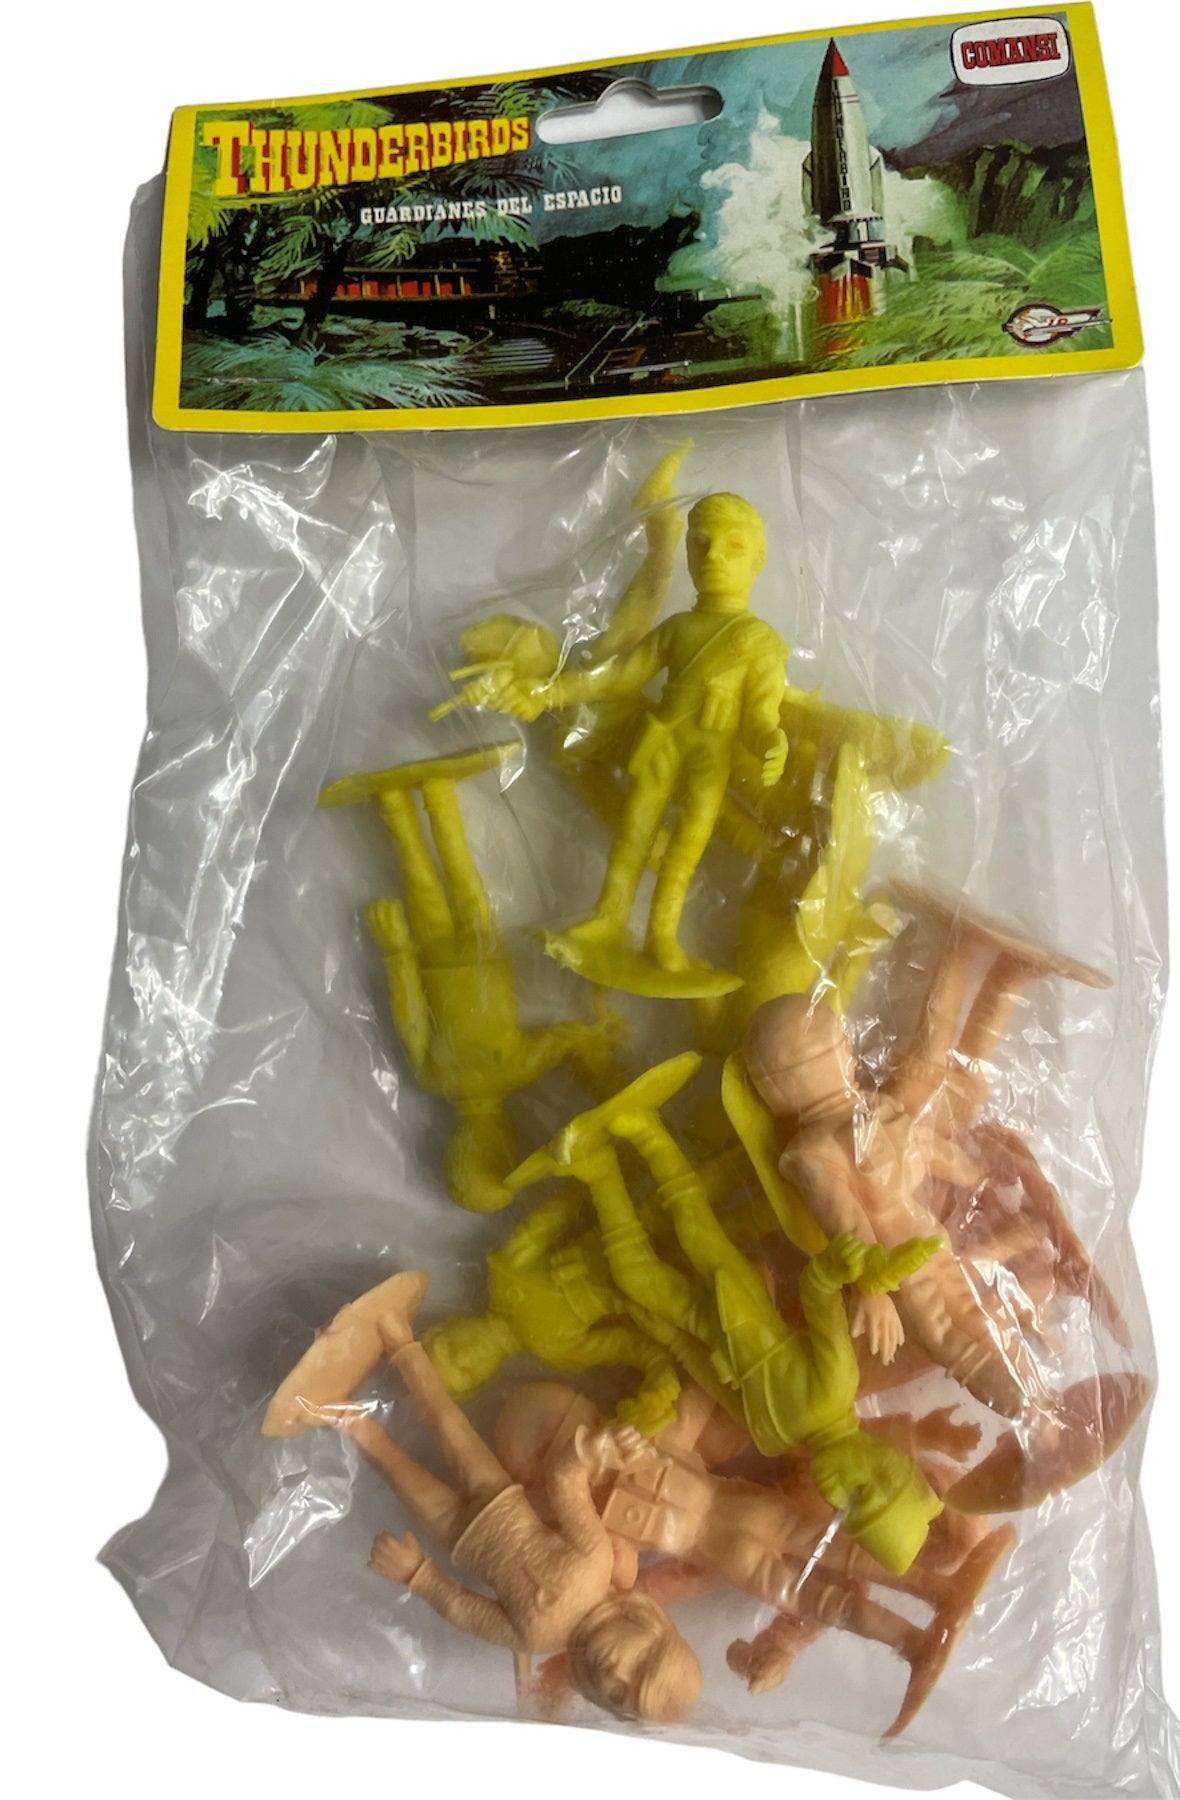 Vintage 1960's Gerry Andersons Thunderbirds Comansi International Rescue Plastic Figure Set Yellow/Baige Guardianes Del Espacio New In Sealed Bag - Shop Stock Room Find.